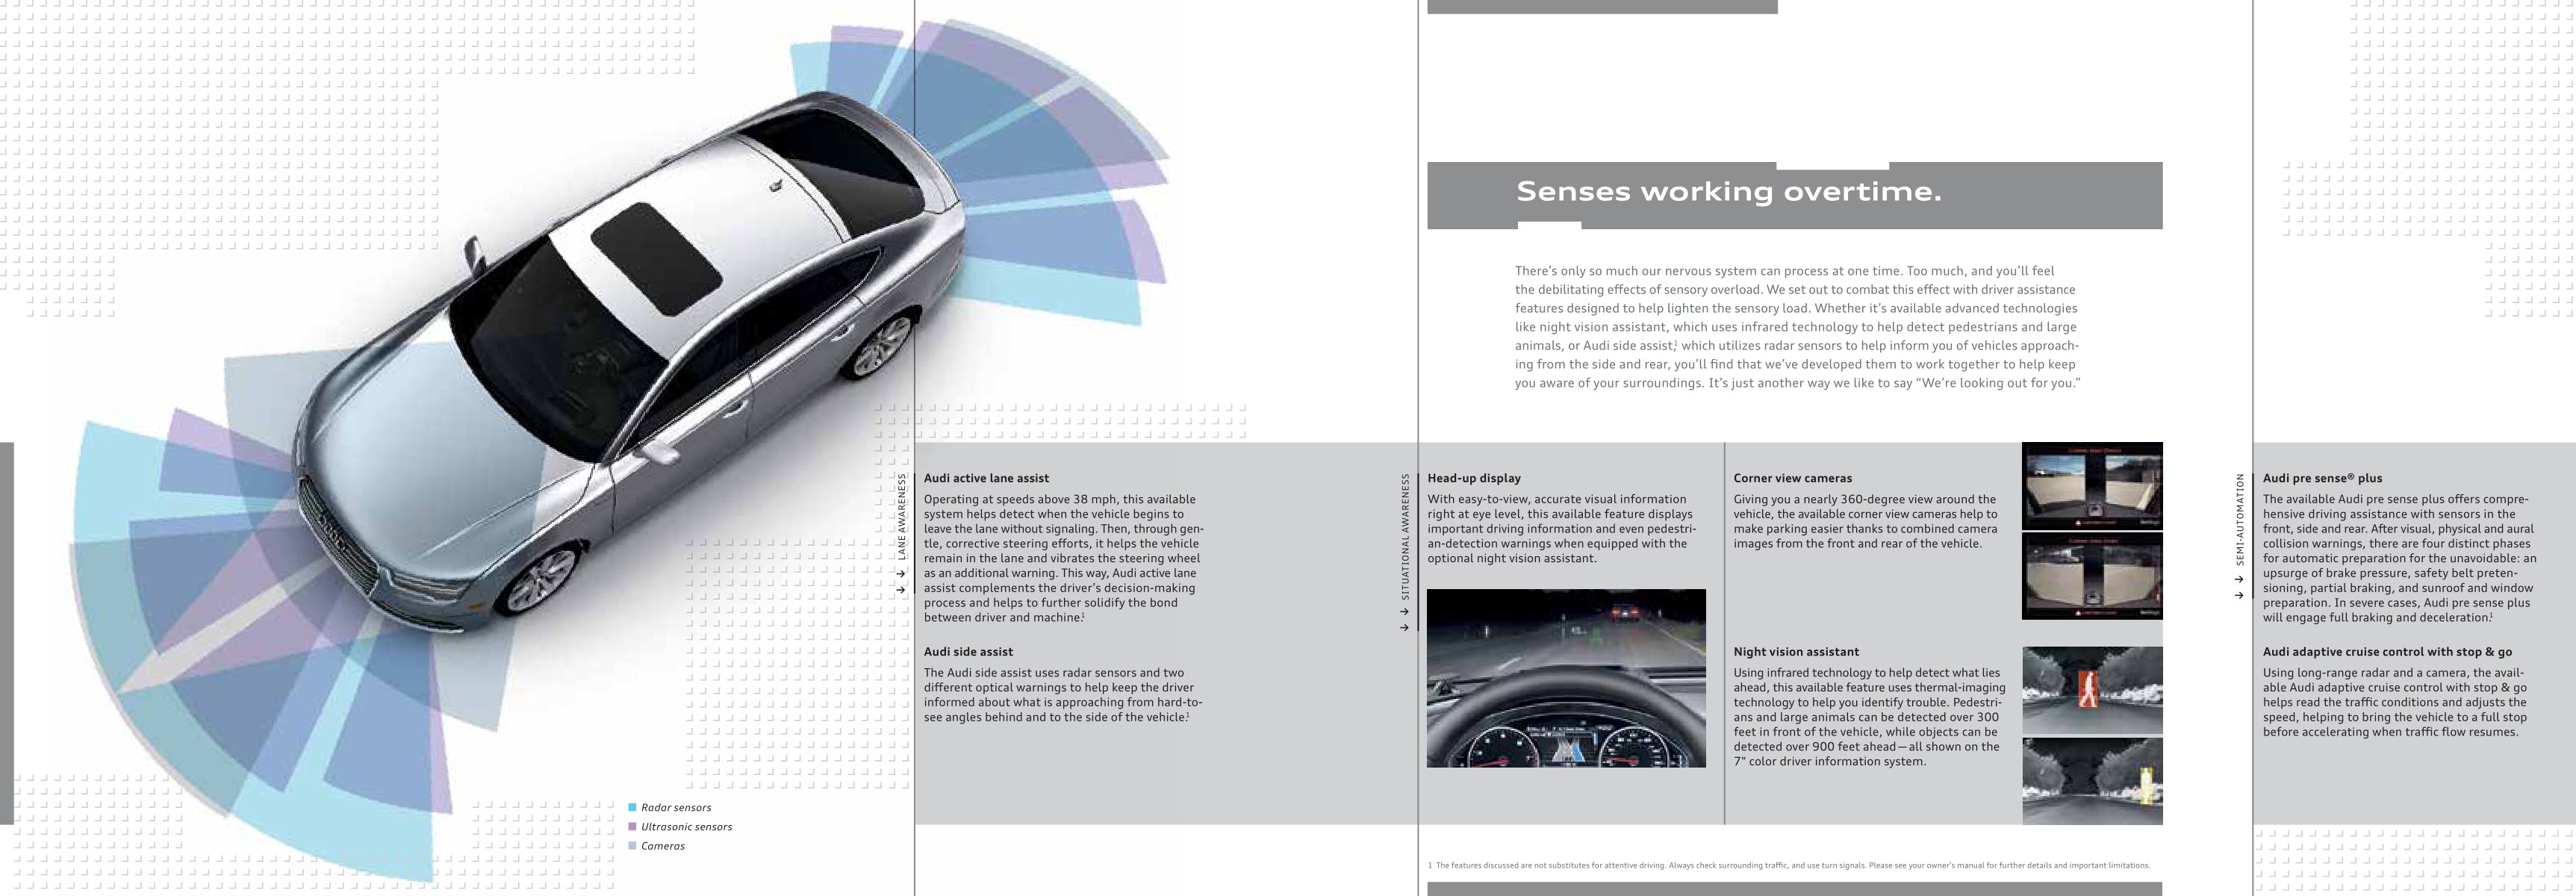 2016 Audi A7 Brochure Page 2